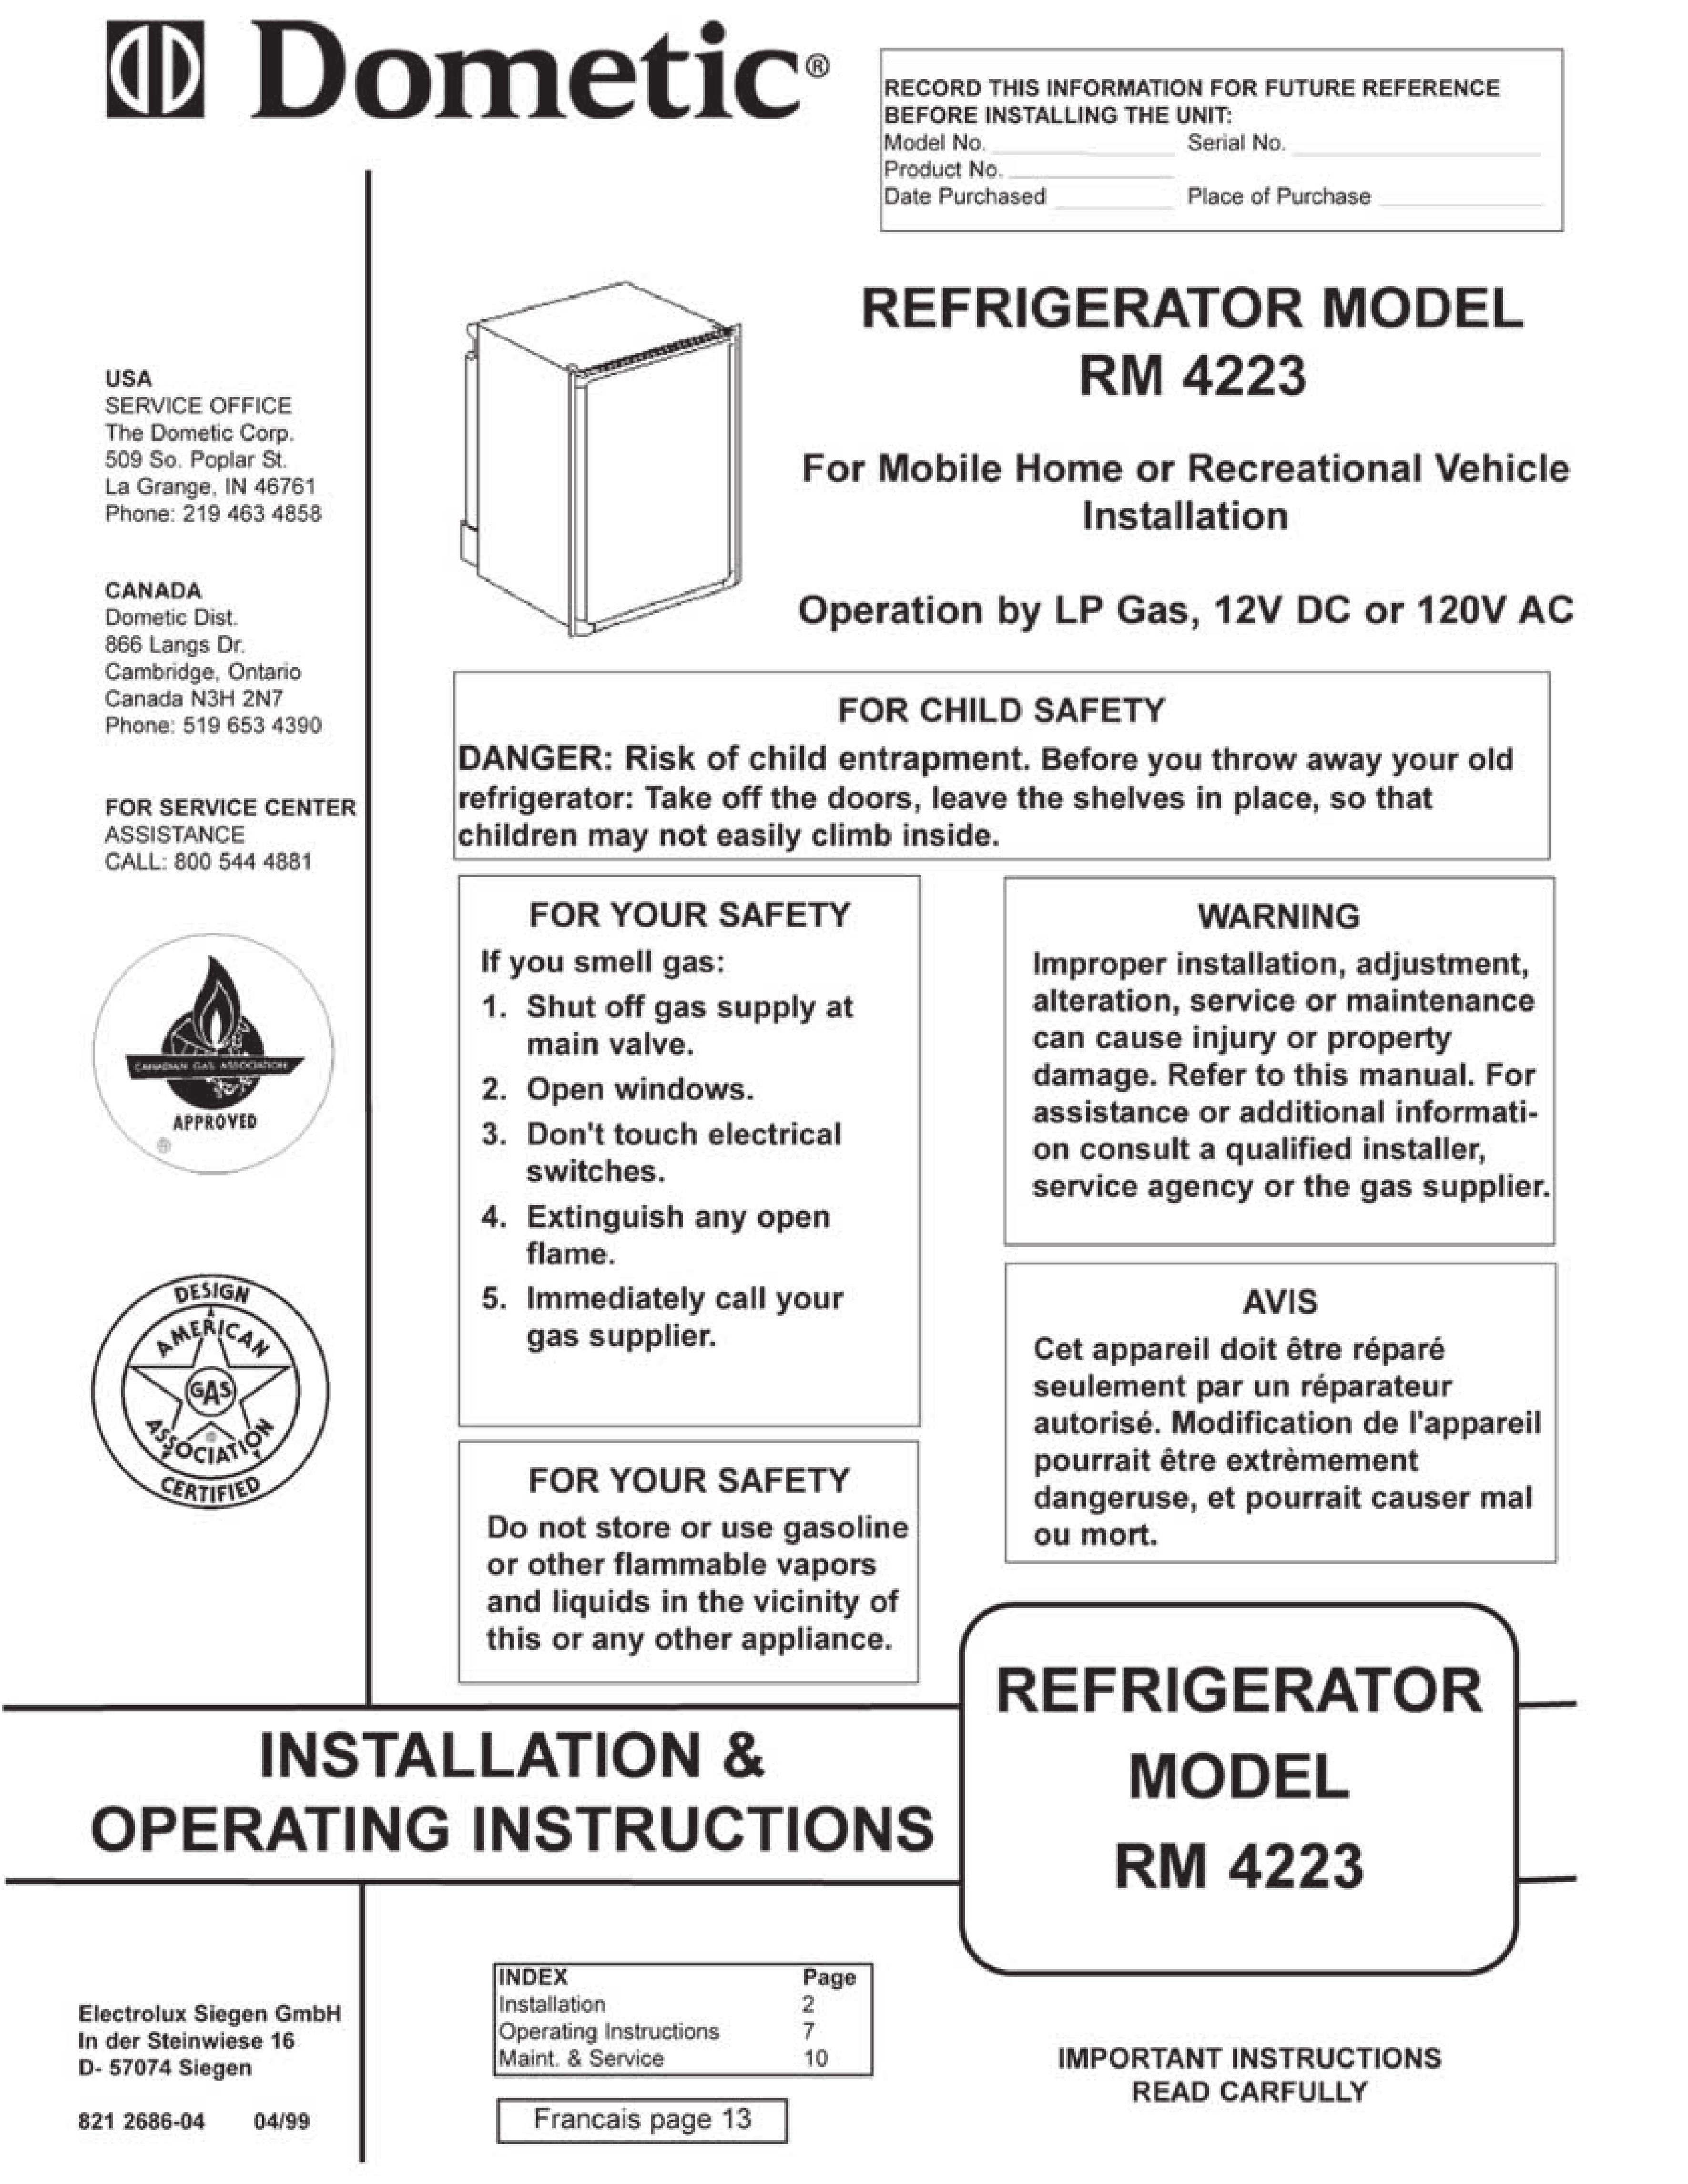 Dometic RM 4223 Refrigerator User Manual